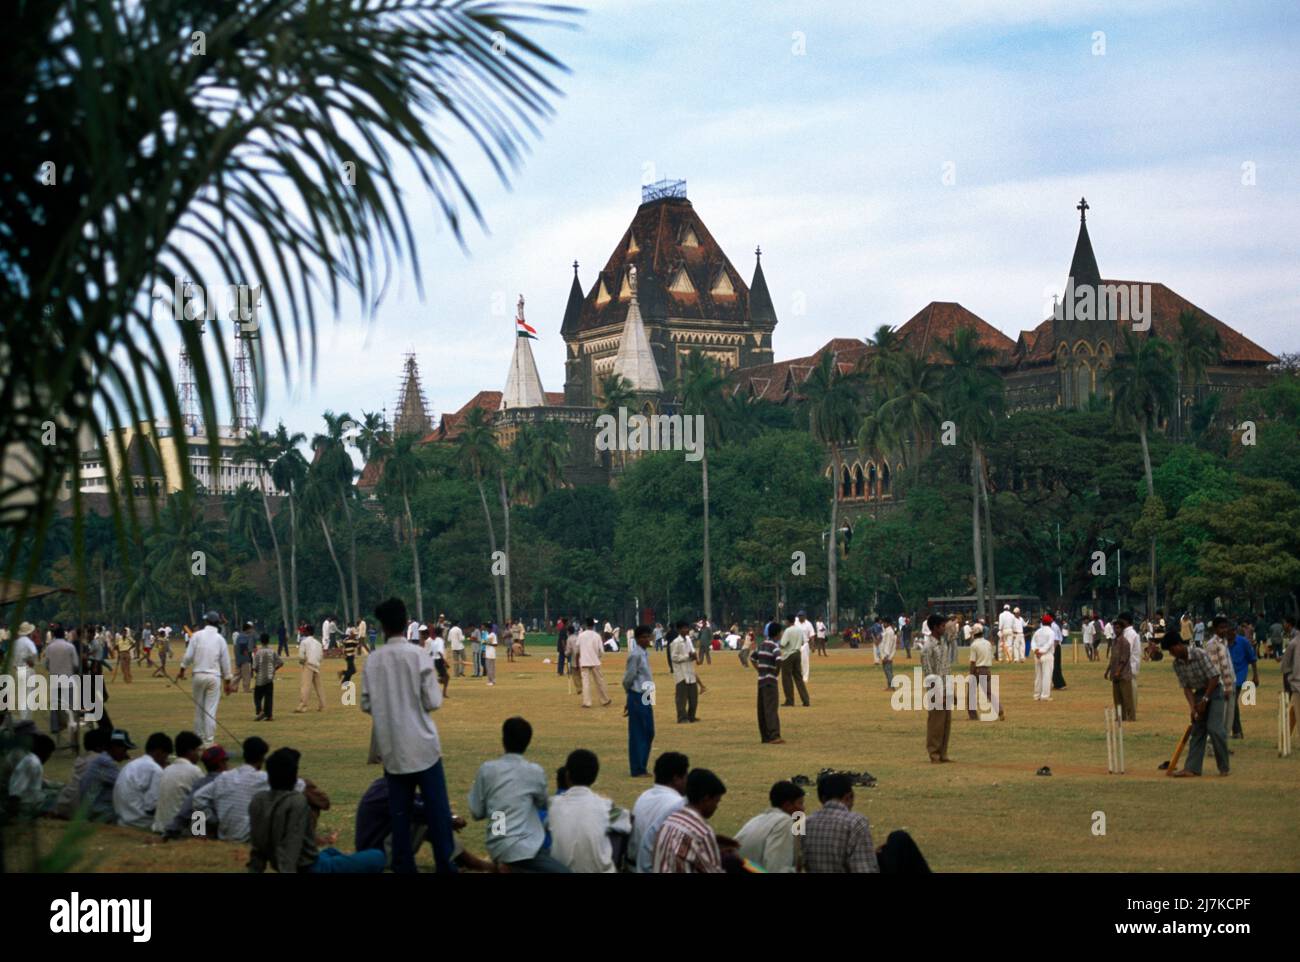 Mumbai (Formerly Bombay ) India Oval Maiden Boys Cricket On Sunday High Court Building in Background Stock Photo